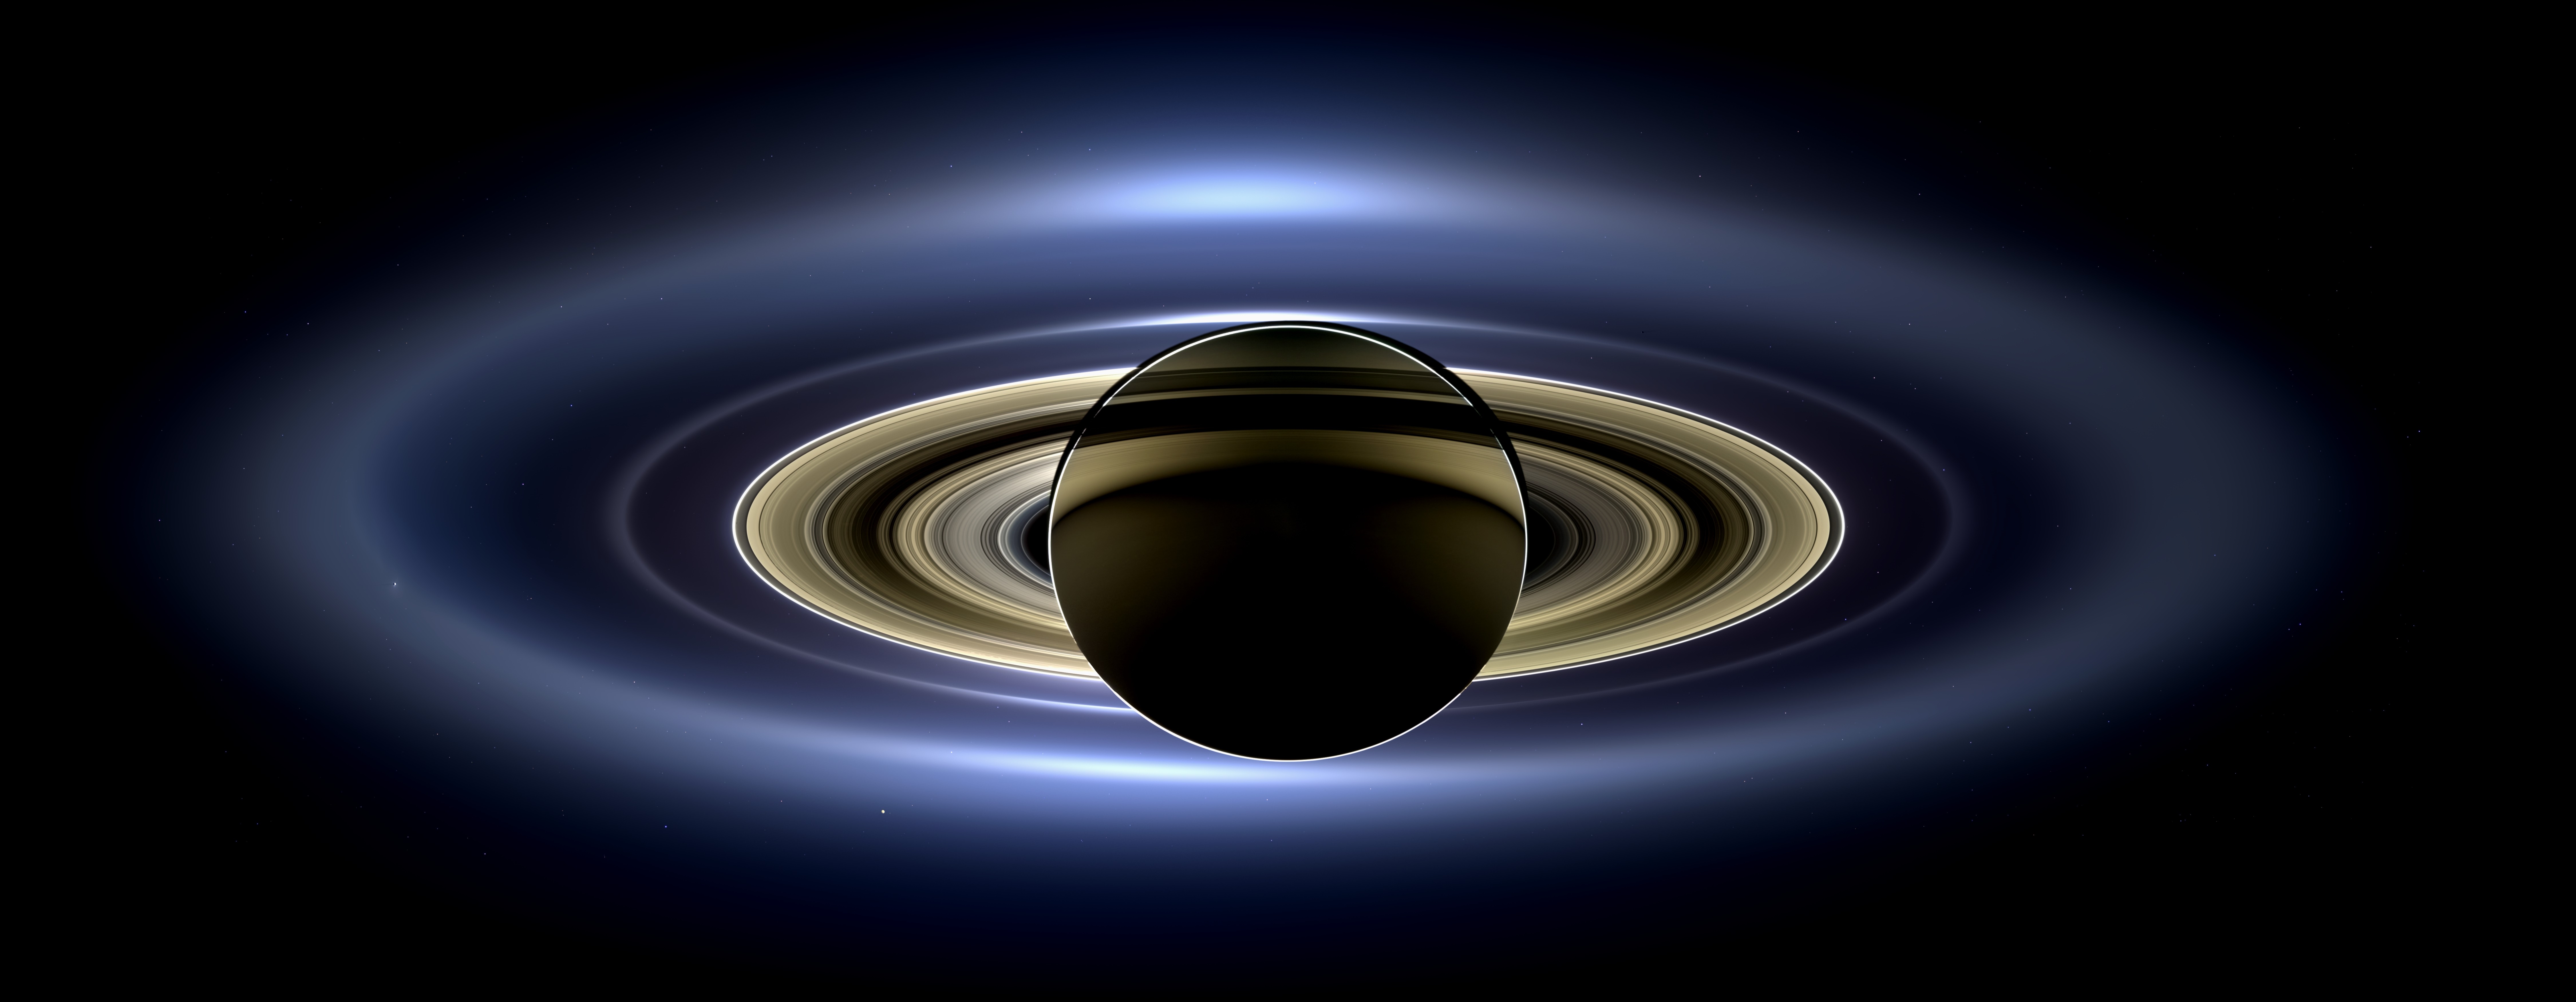 General 9000x3500 Saturn planet space art planetary rings space Cassini digital art